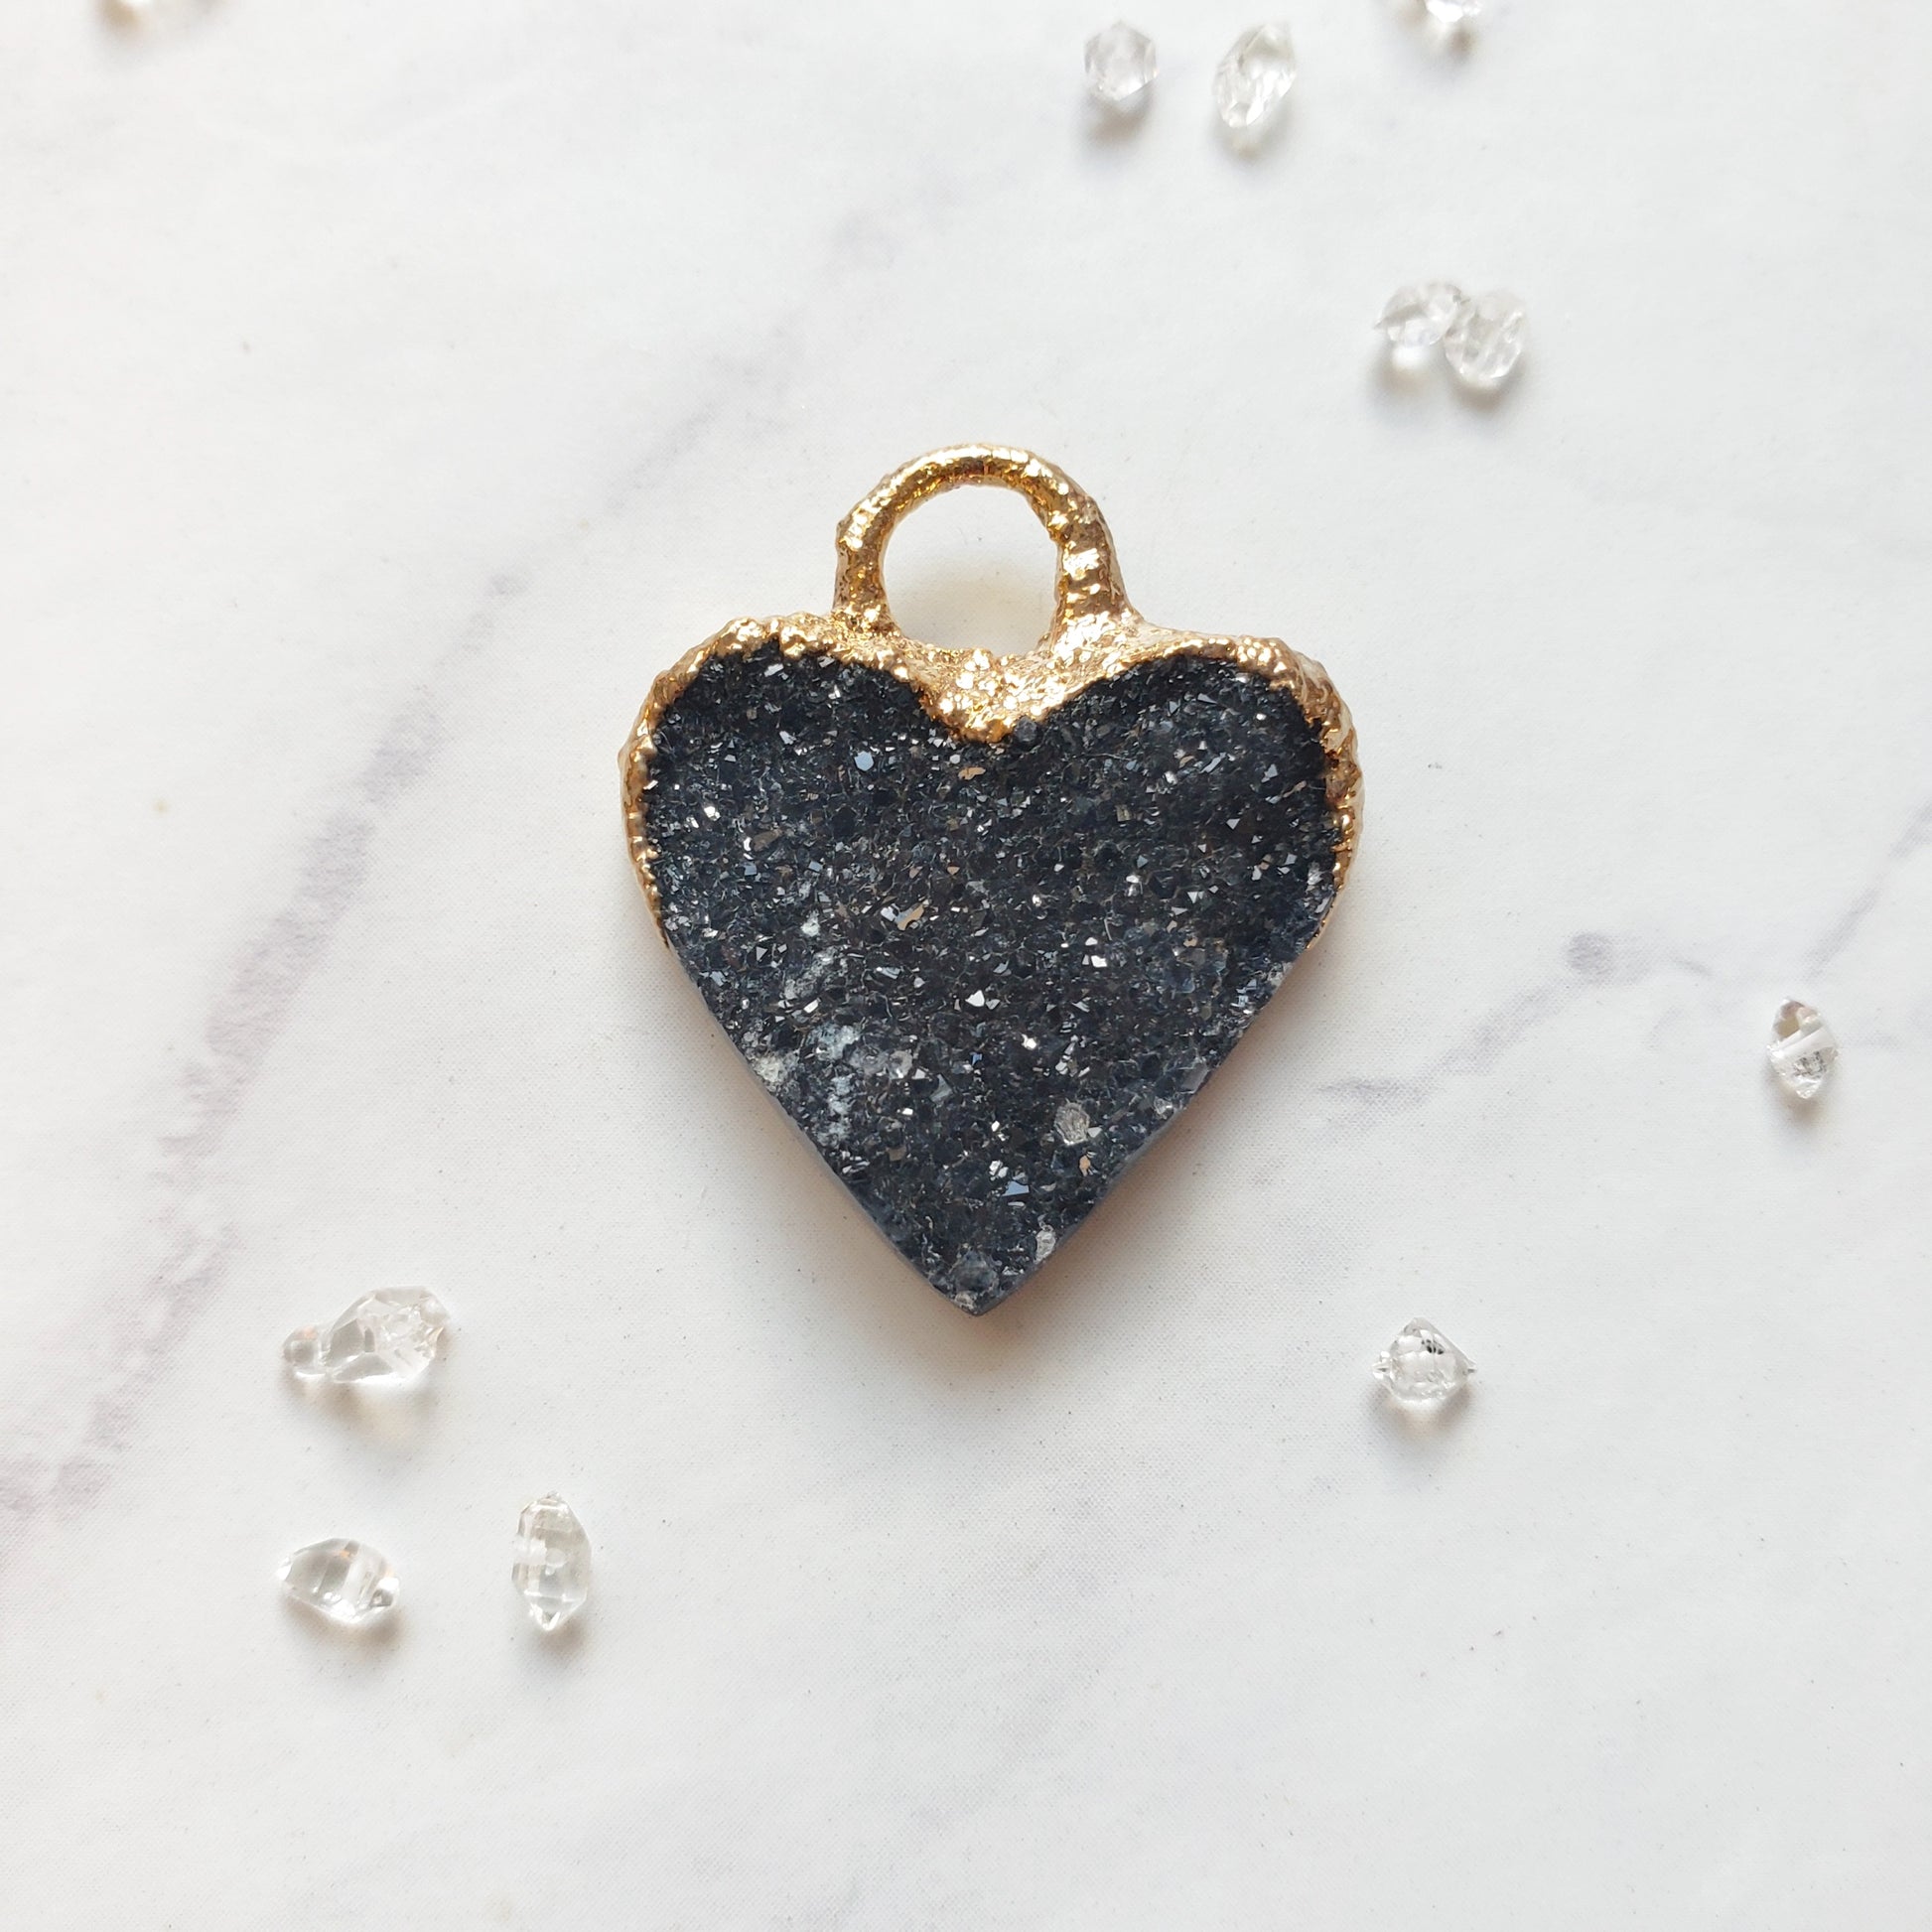 Crystal Heart Pendant Necklace Shop Dreamers of Dreams